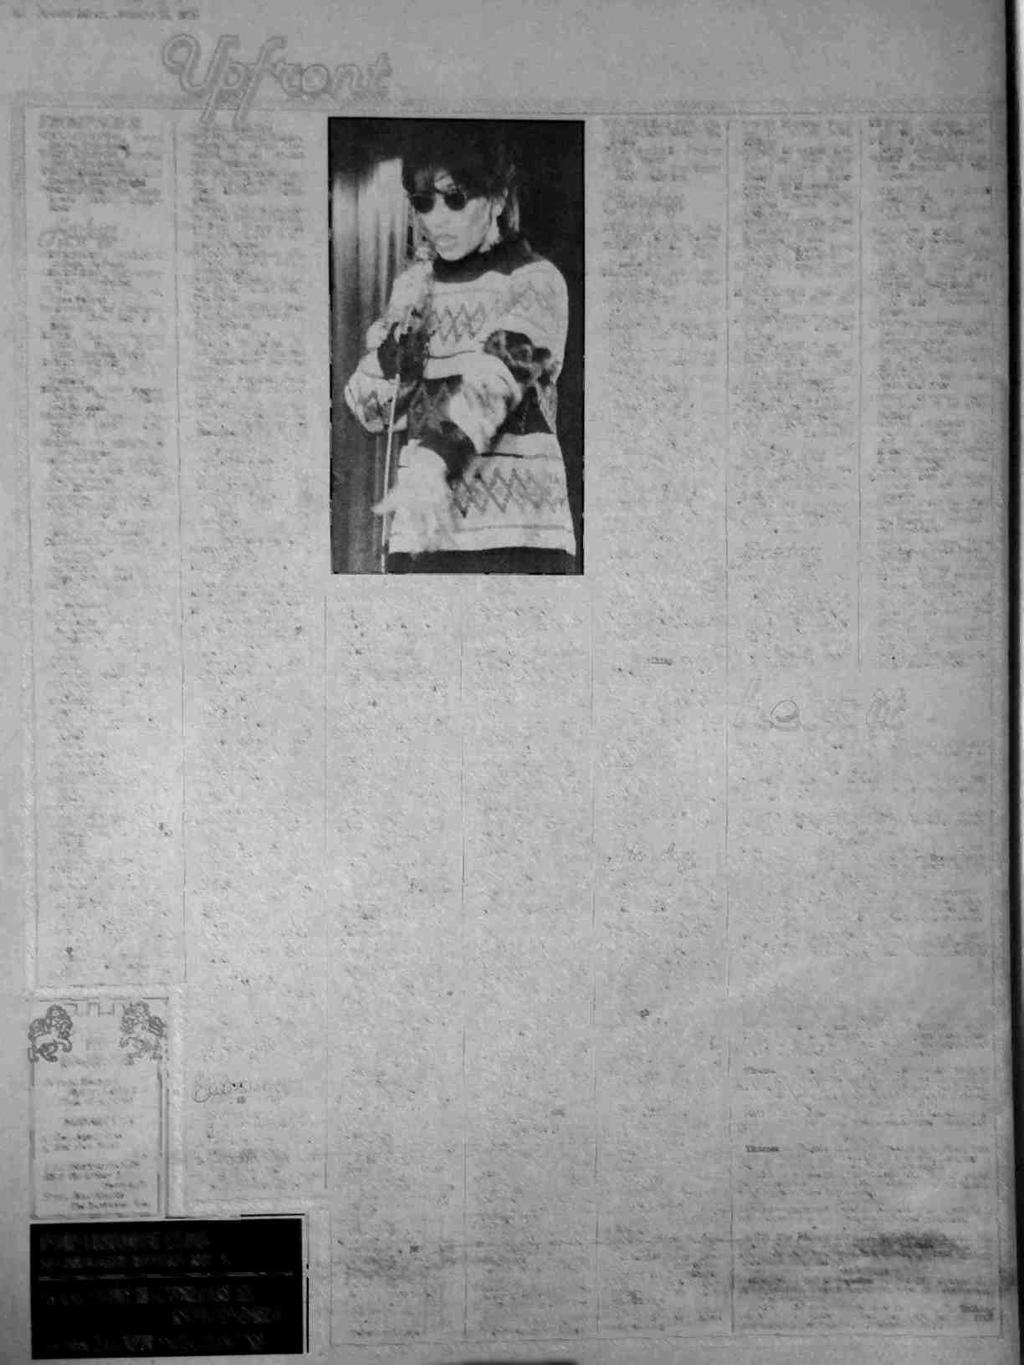 b canty ;/ 32 Record Mrror, January 241, 1978 F ROM PAGE" 31 M ELLNGTON Town Hearse. TyV Gets MNT RUNYON, Pavlon /1 1103).